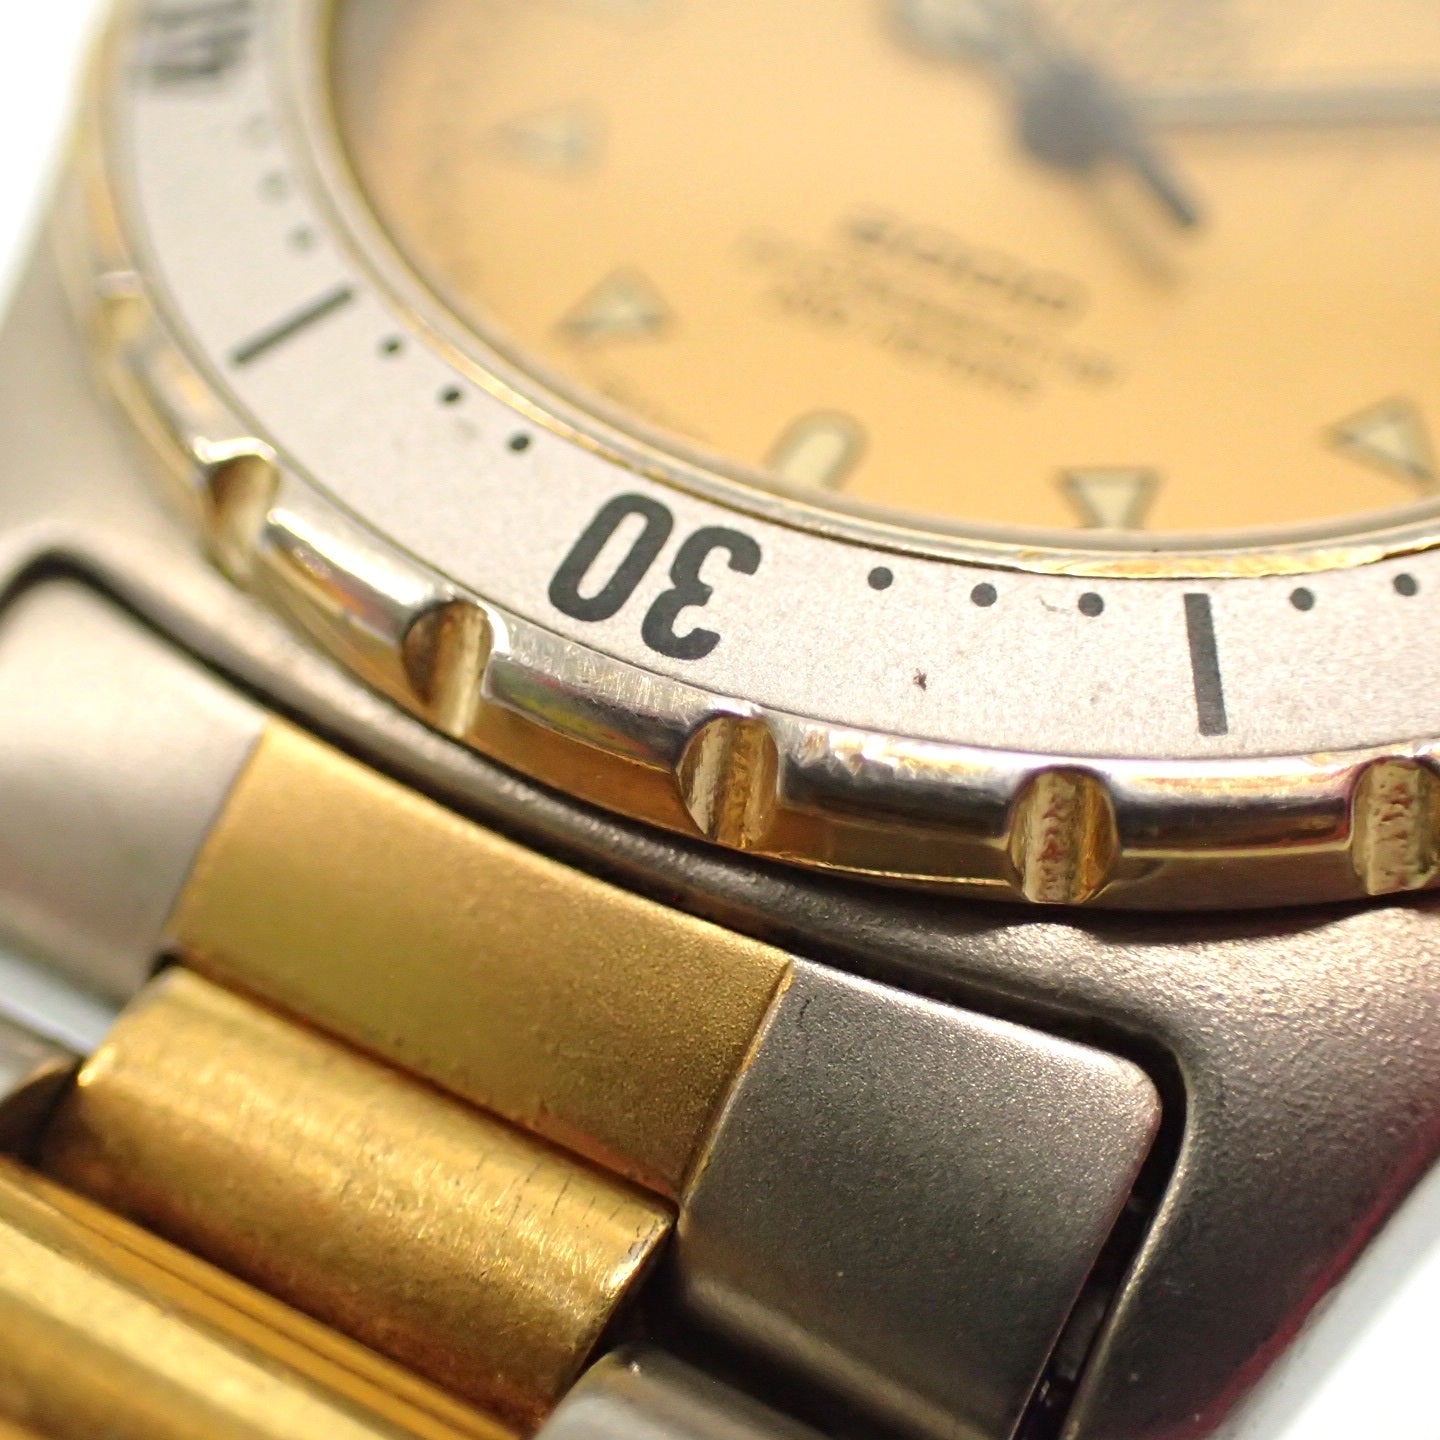 Used ◆TAG Heuer watch 974.013F 2000 Series Professional 200M Date Quartz Silver x Gold TAG HEUER [AFI2] 